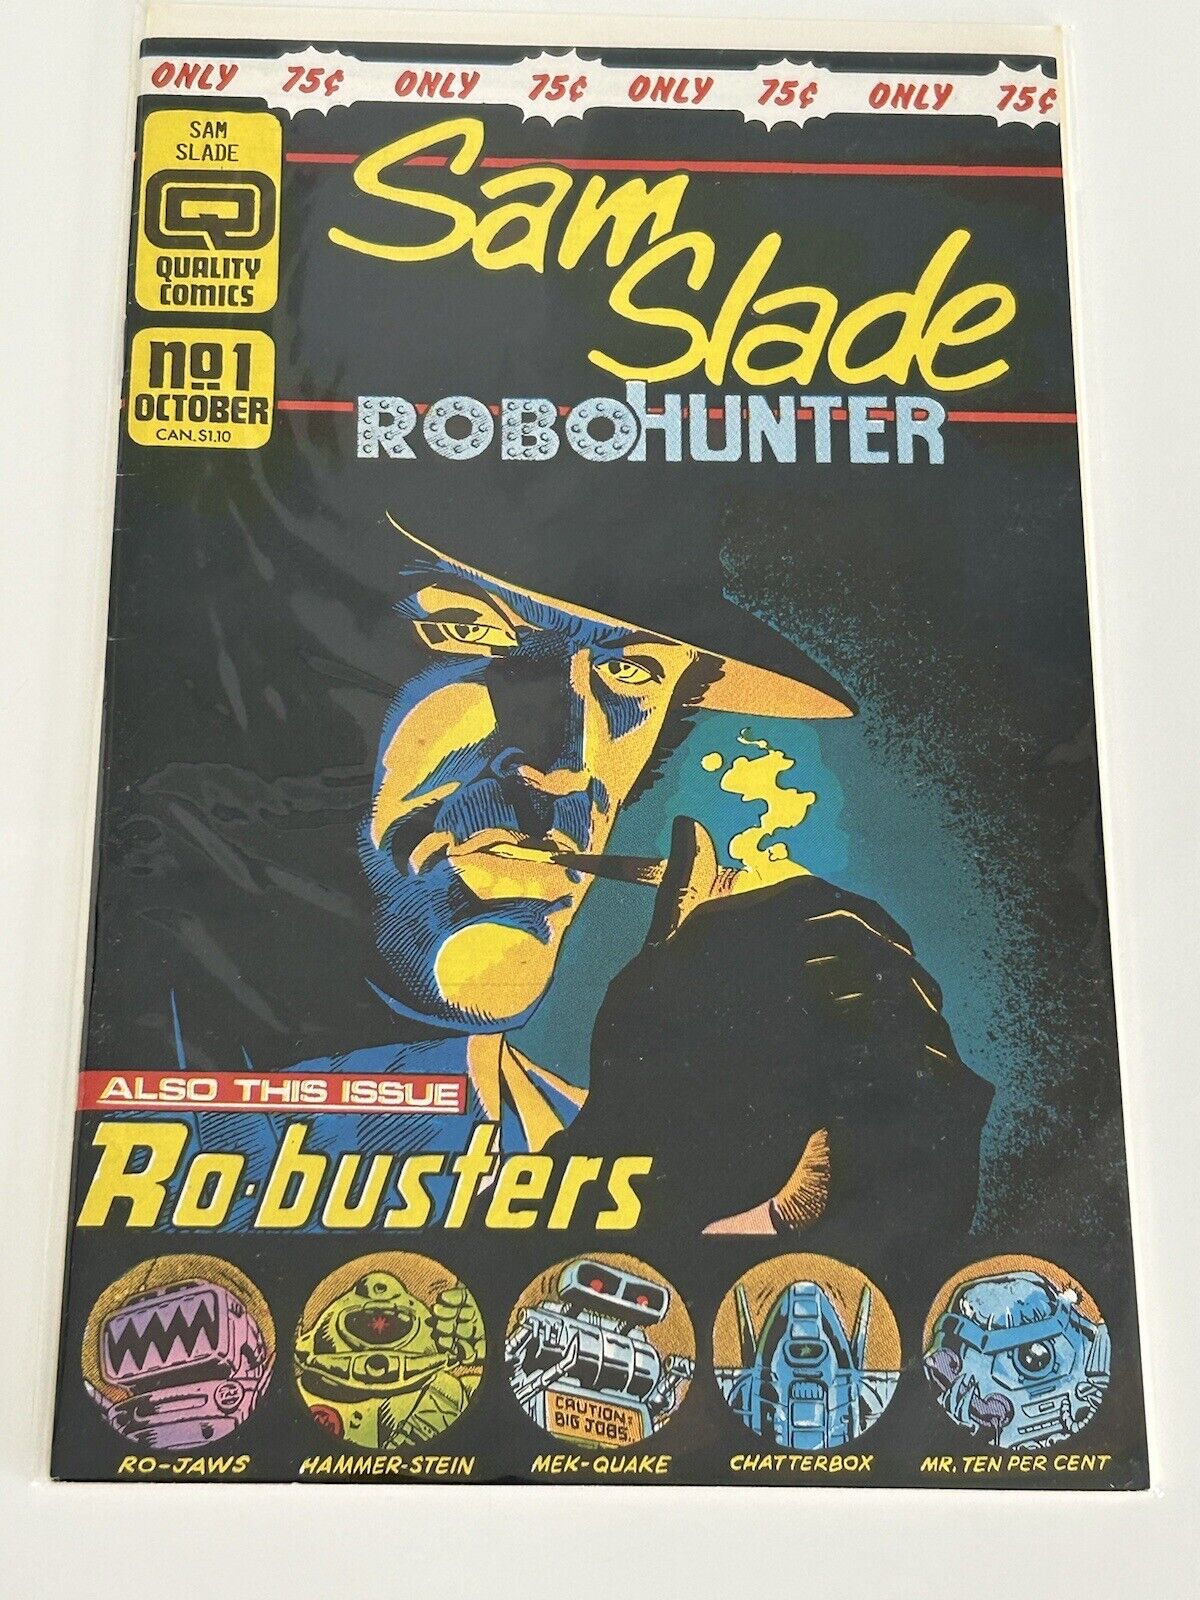 Sam Slade Robohunter #1 Oct 1986: Quality Comics, boarded & bagged; VF/Near Mint